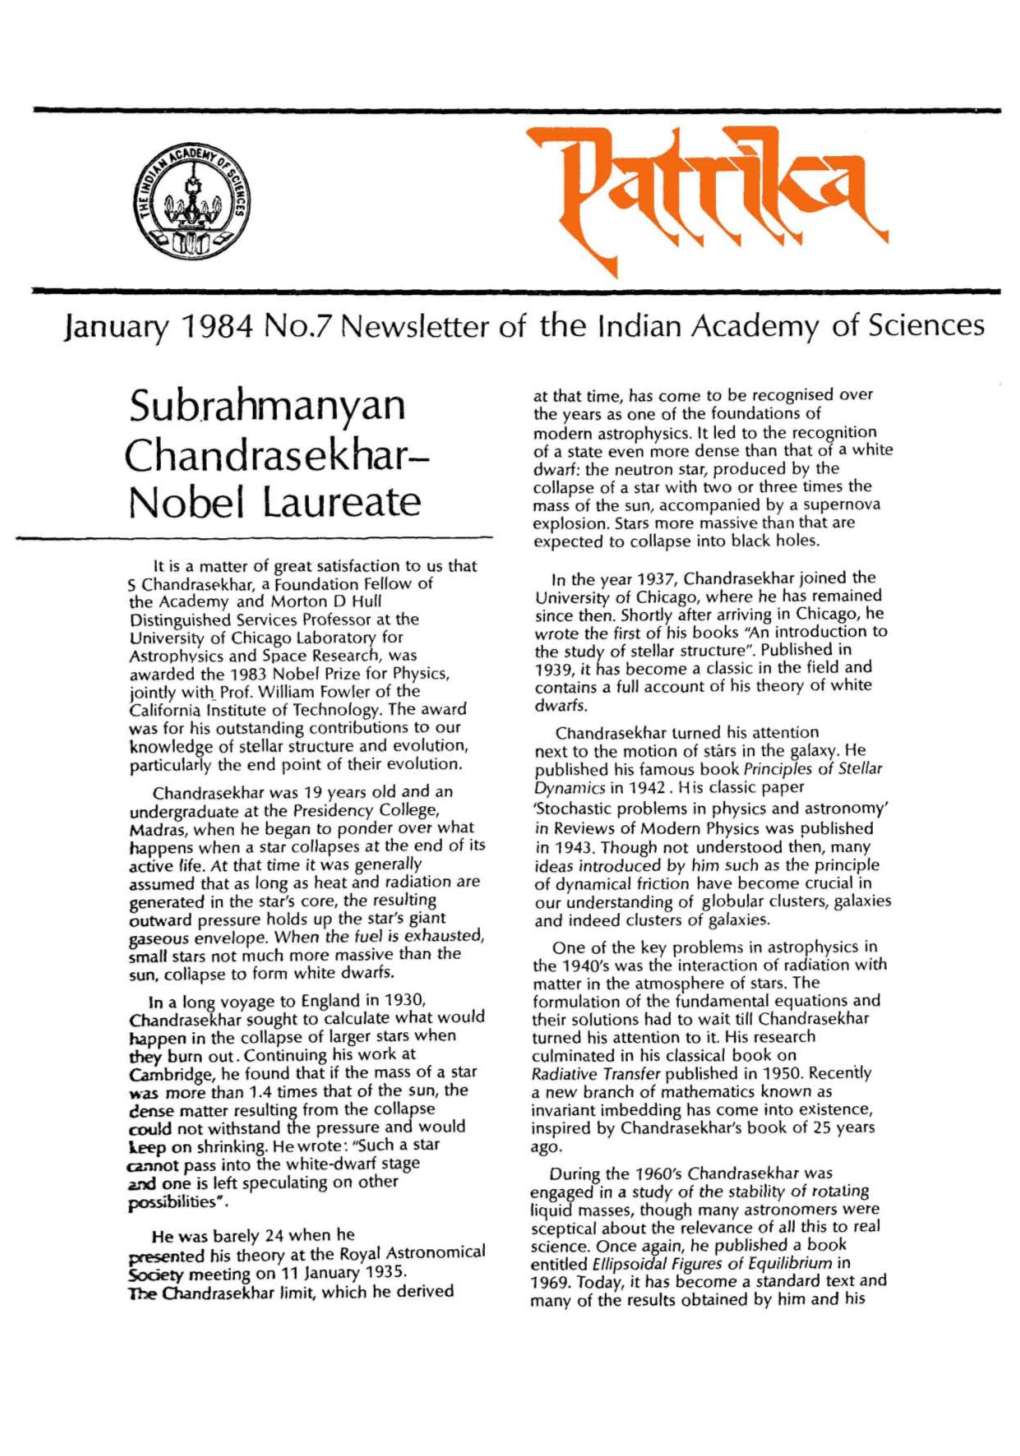 Subrahmanyan Chandrasekhar- Nobel Laureate